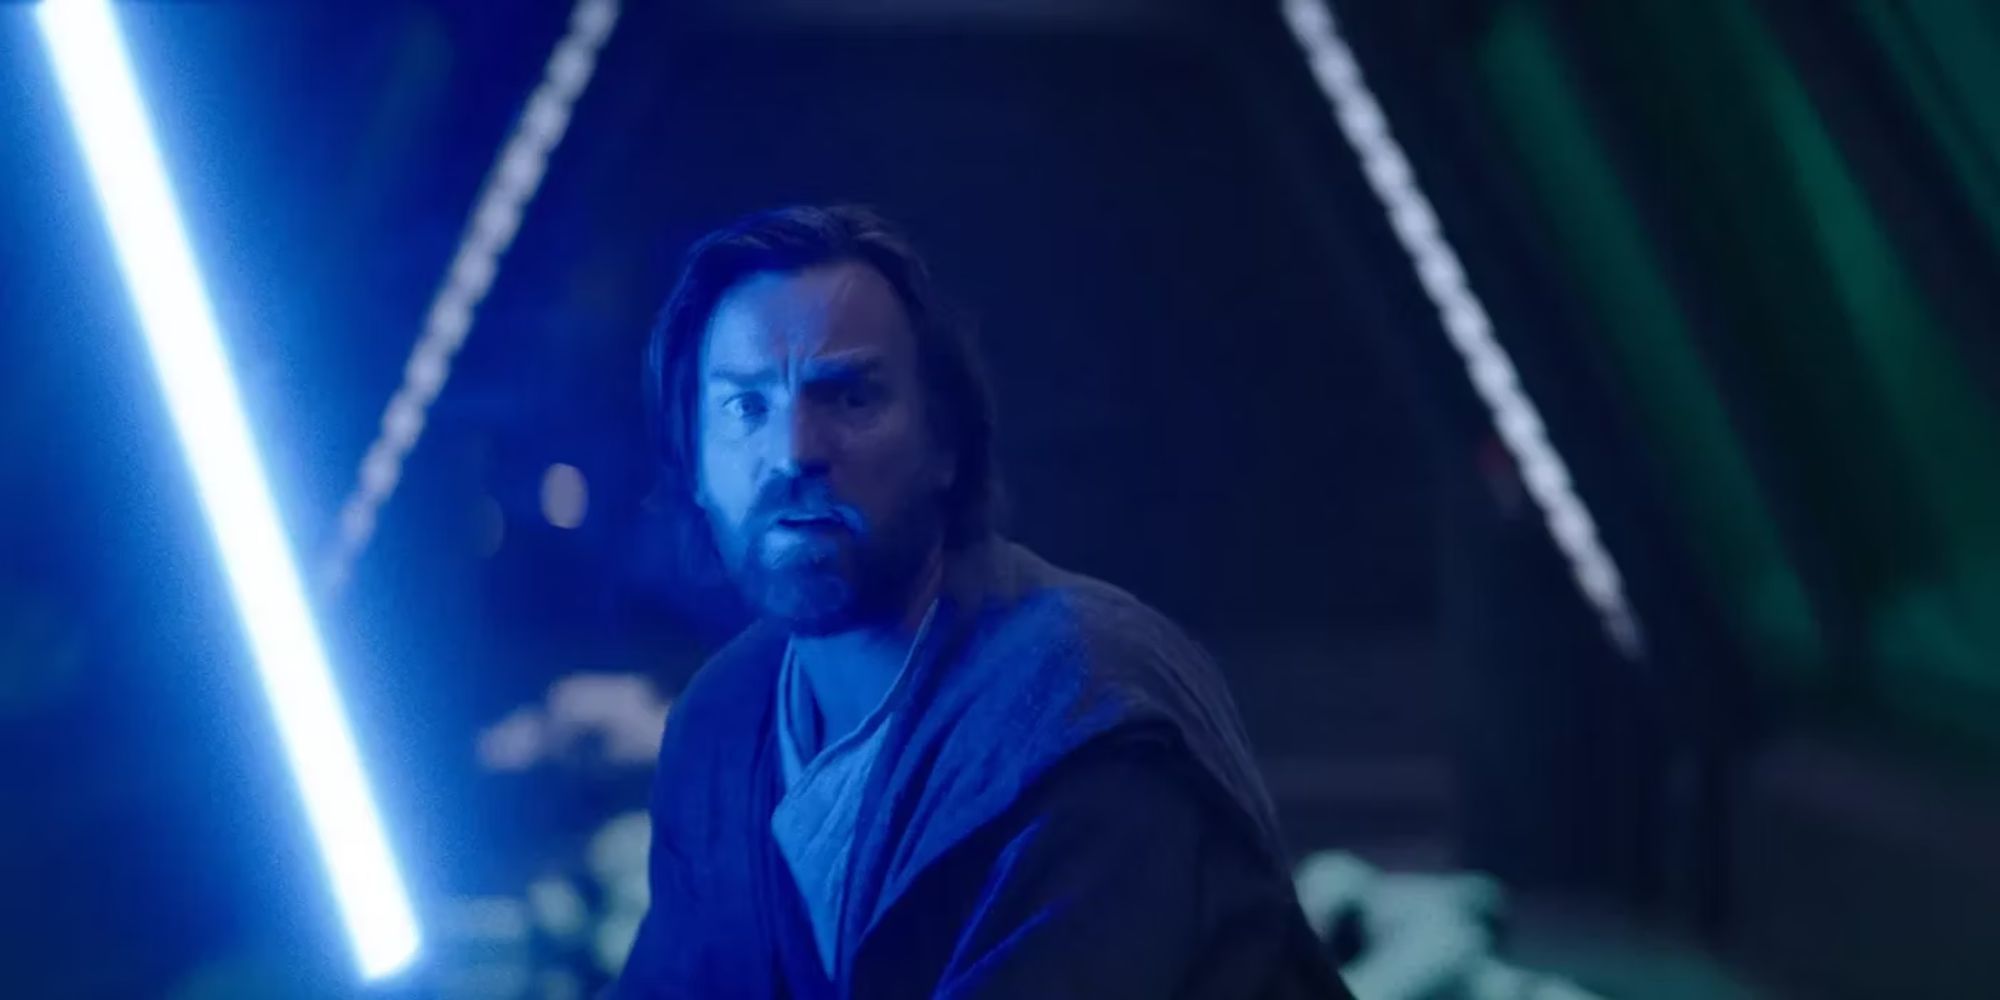 Ewan McGregor as Obi-Wan Kenobi looking scared and holding his lightsaber